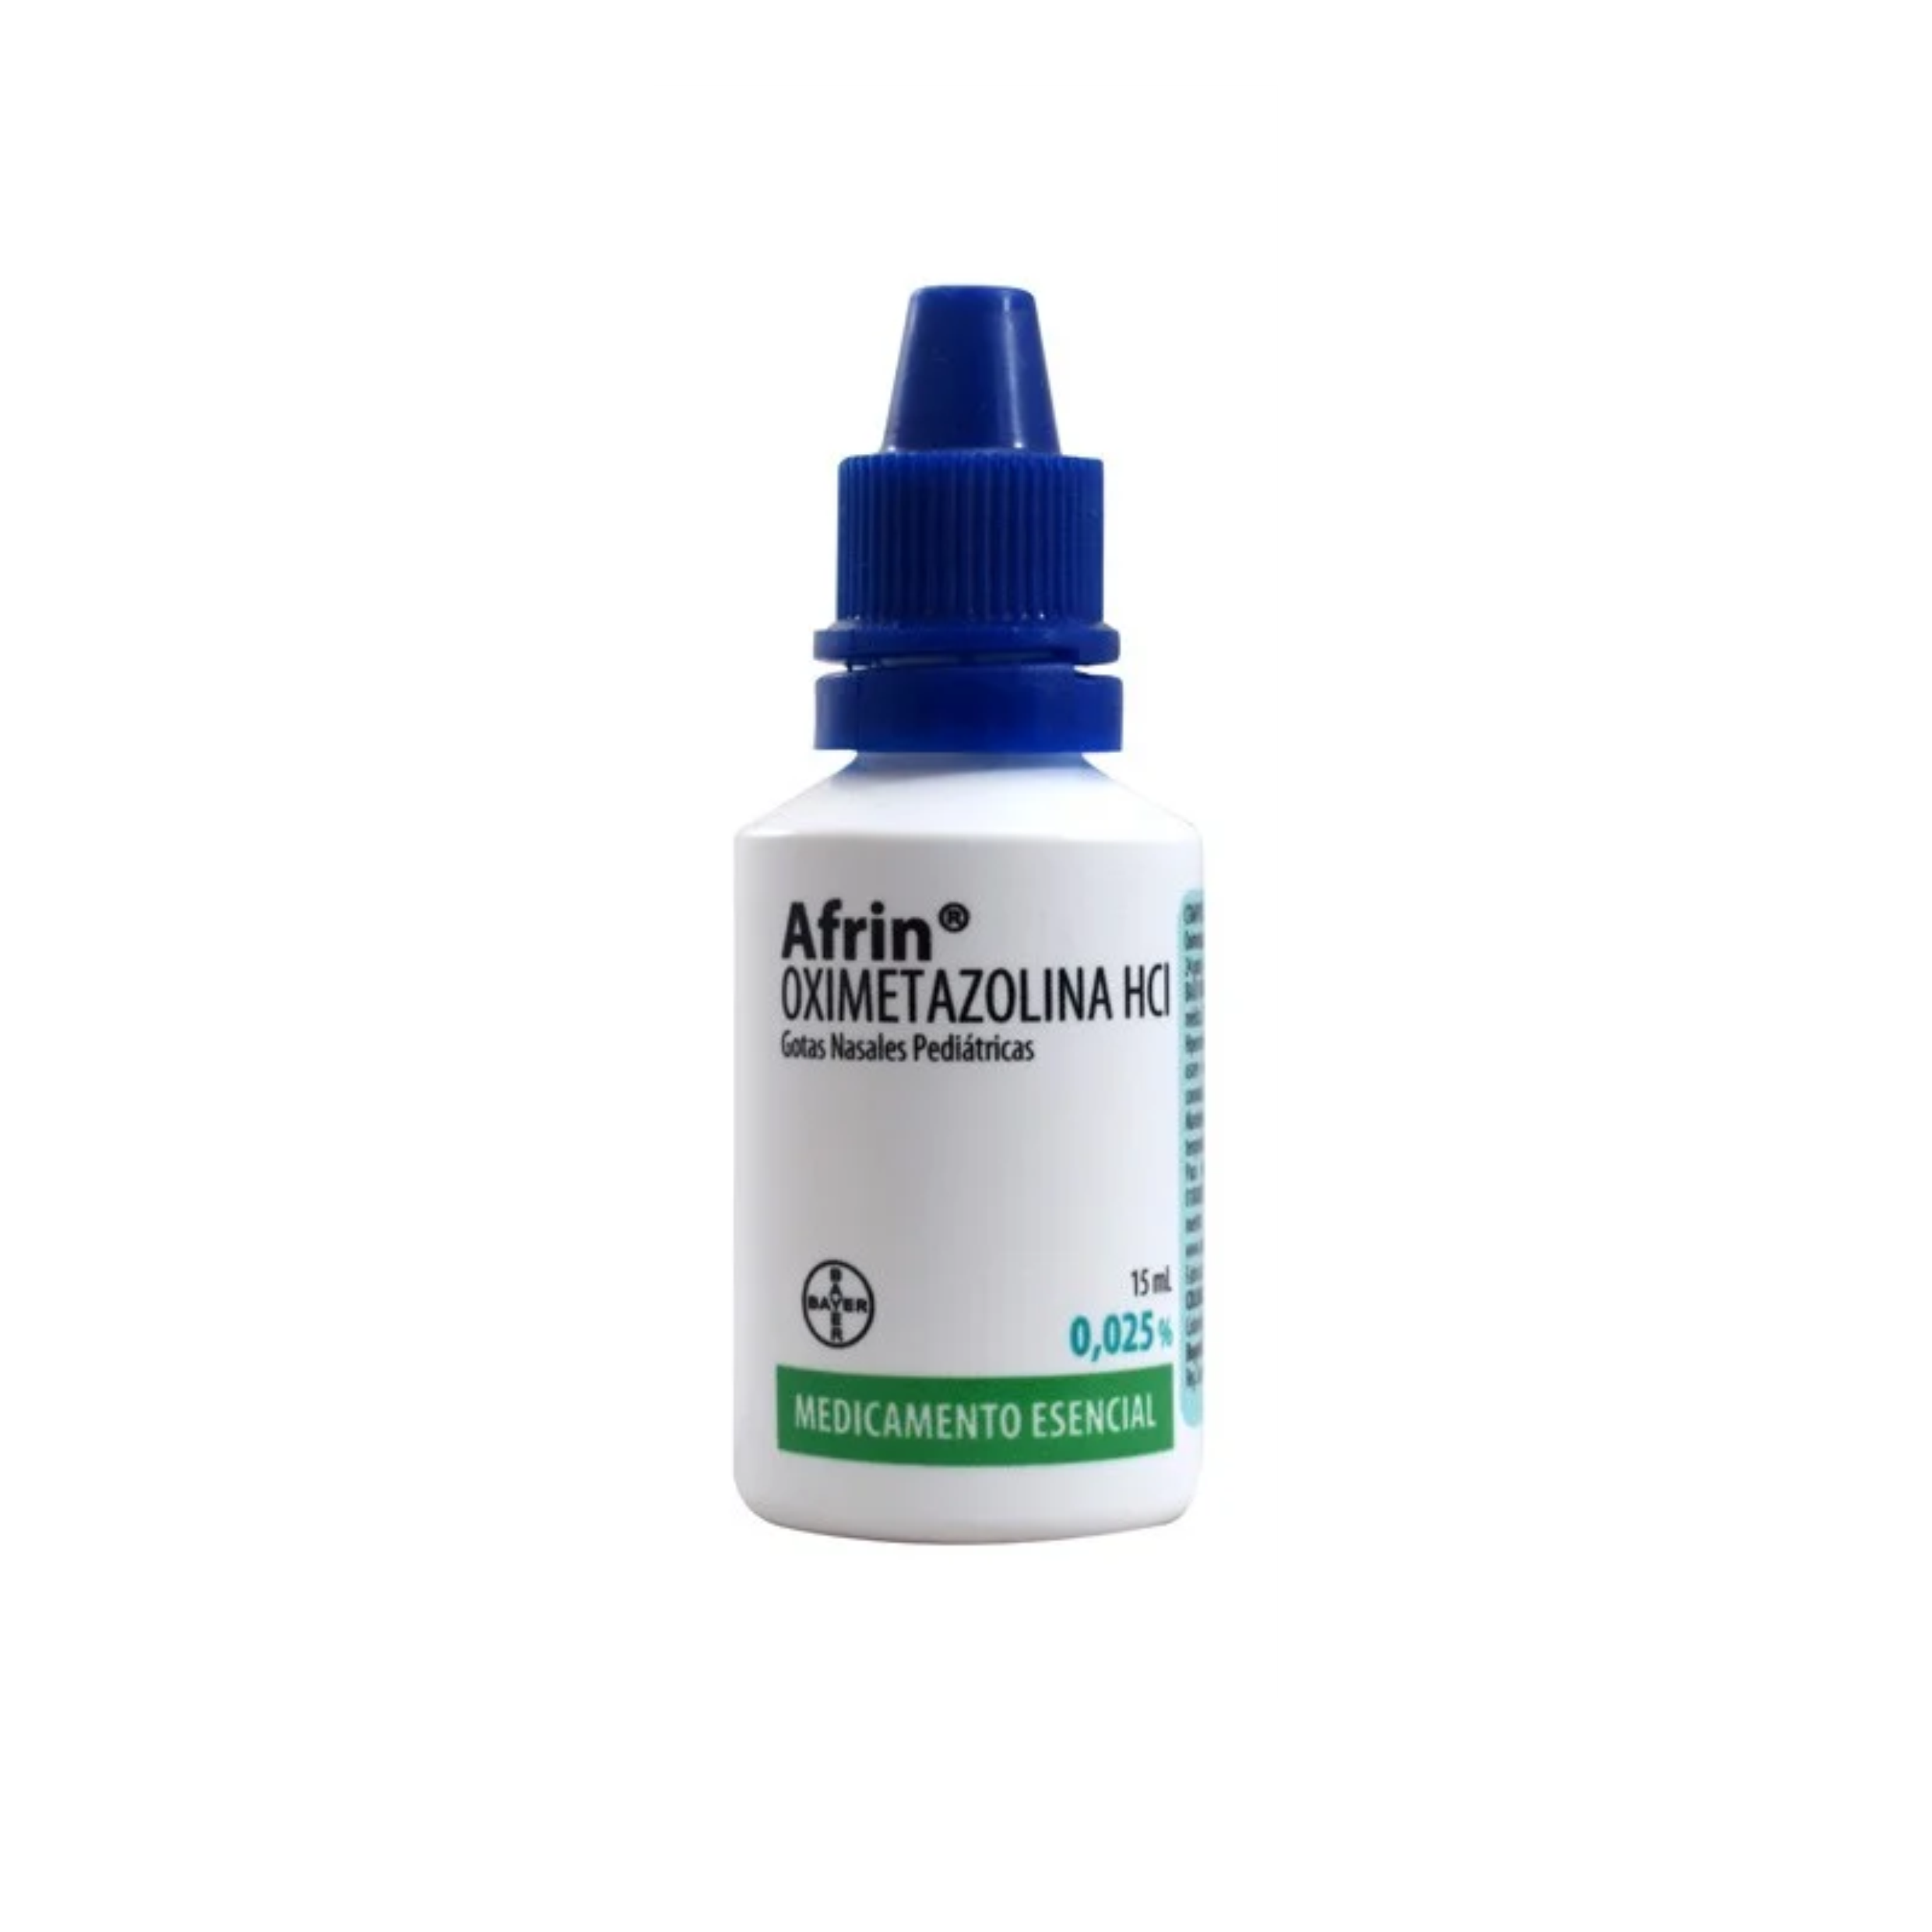 Afrin Gotas nasales pediátricas 0,025% 15 mL